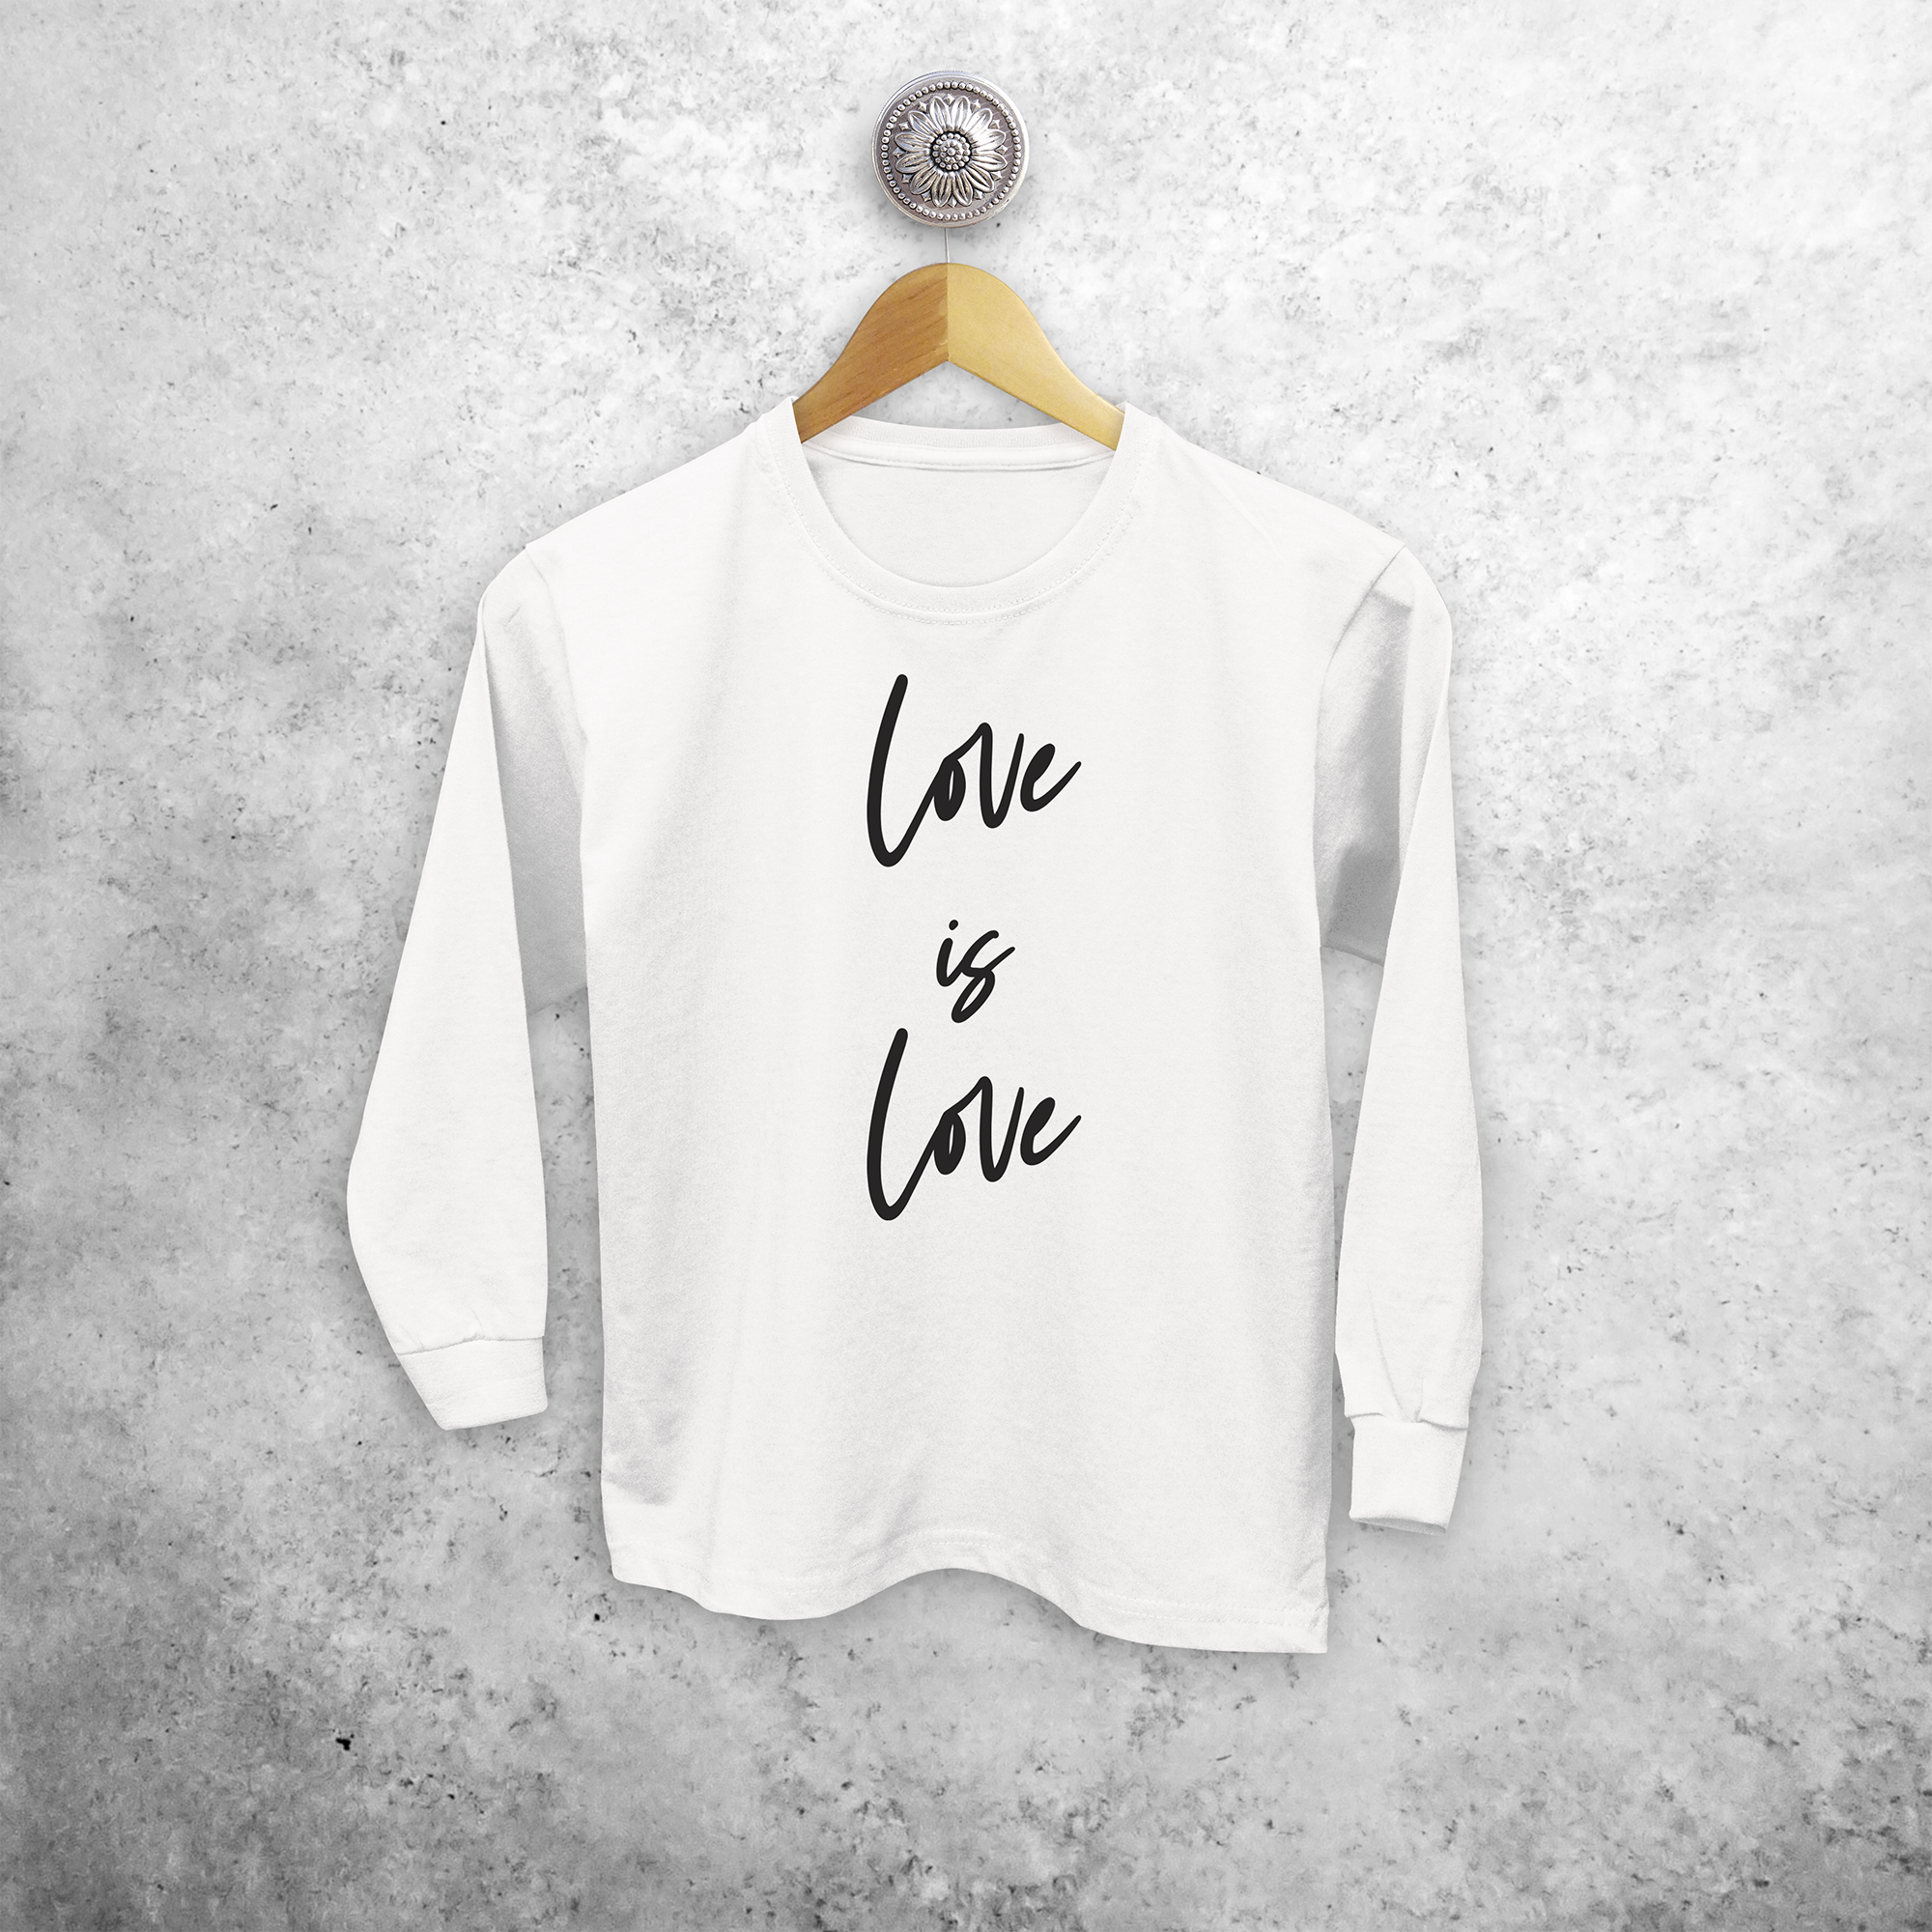 'Love is love' kids longsleeve shirt